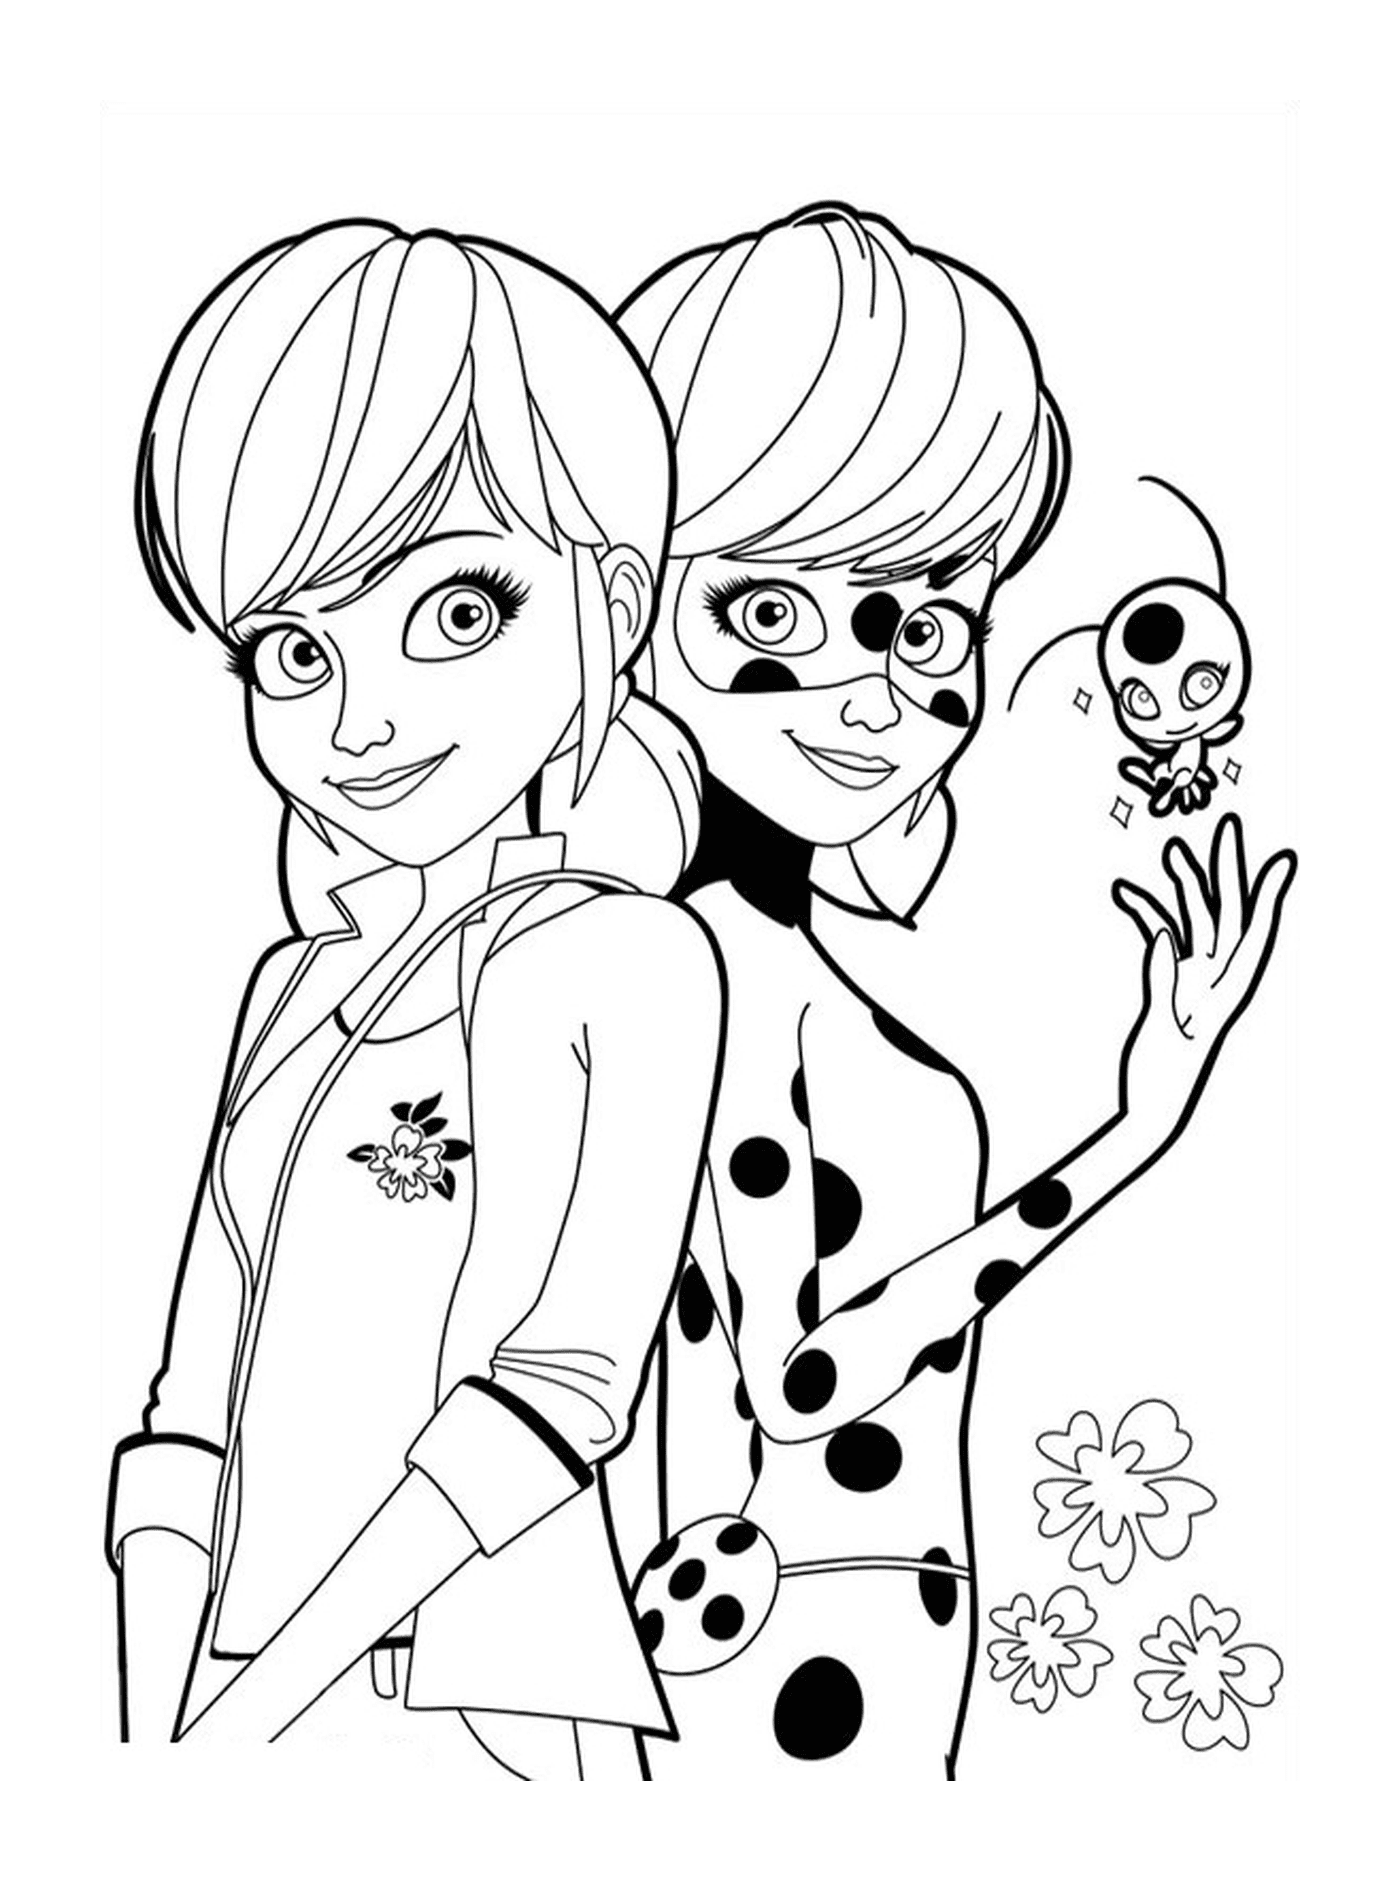  Ladybug and Marinette together 